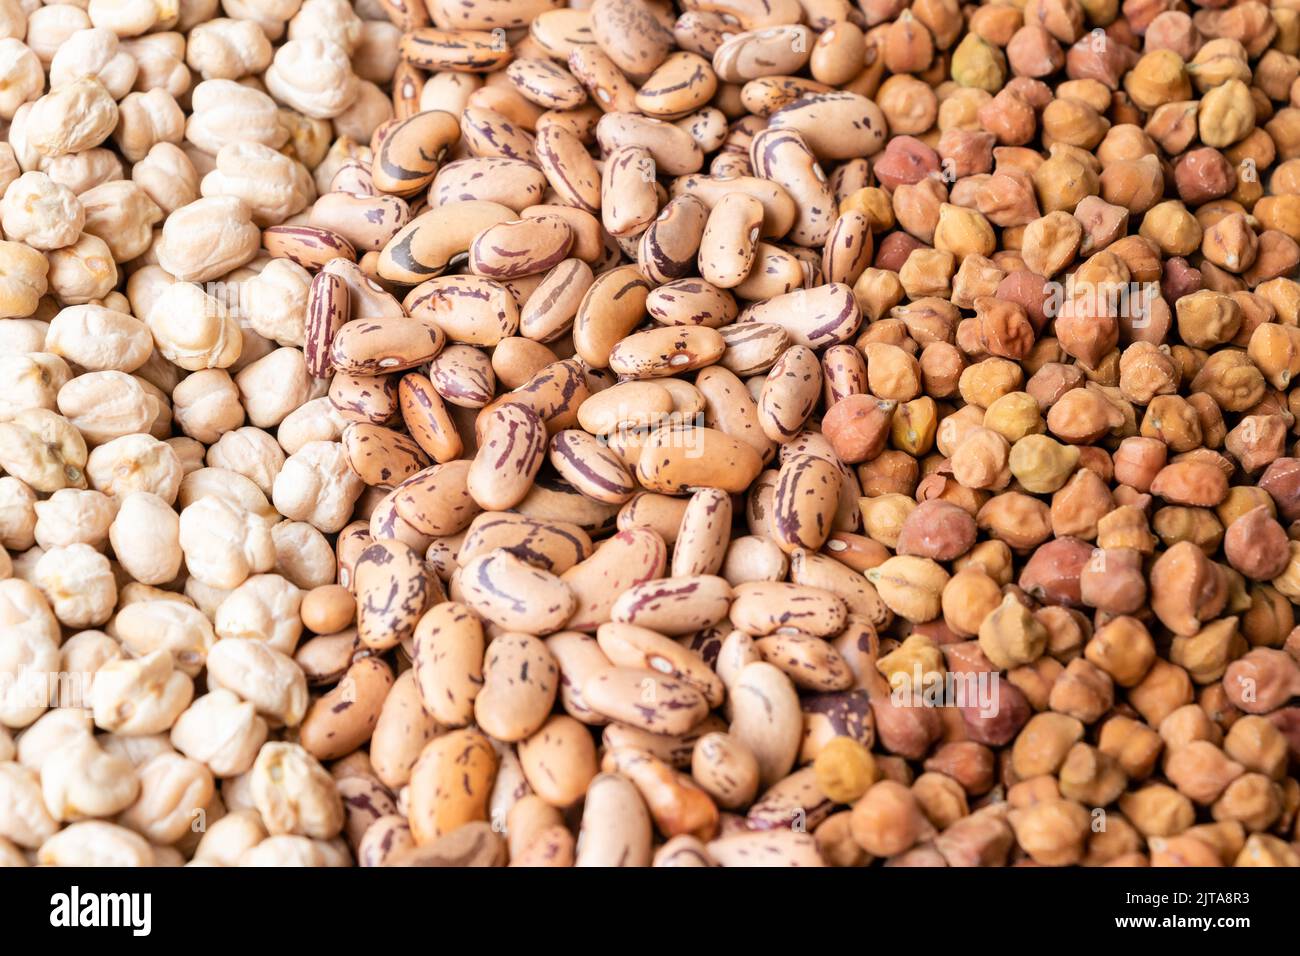 chickpeas (black chana), kidney bean (raj Maha) and white chickpeas (kabuli chana) set close up view Stock Photo